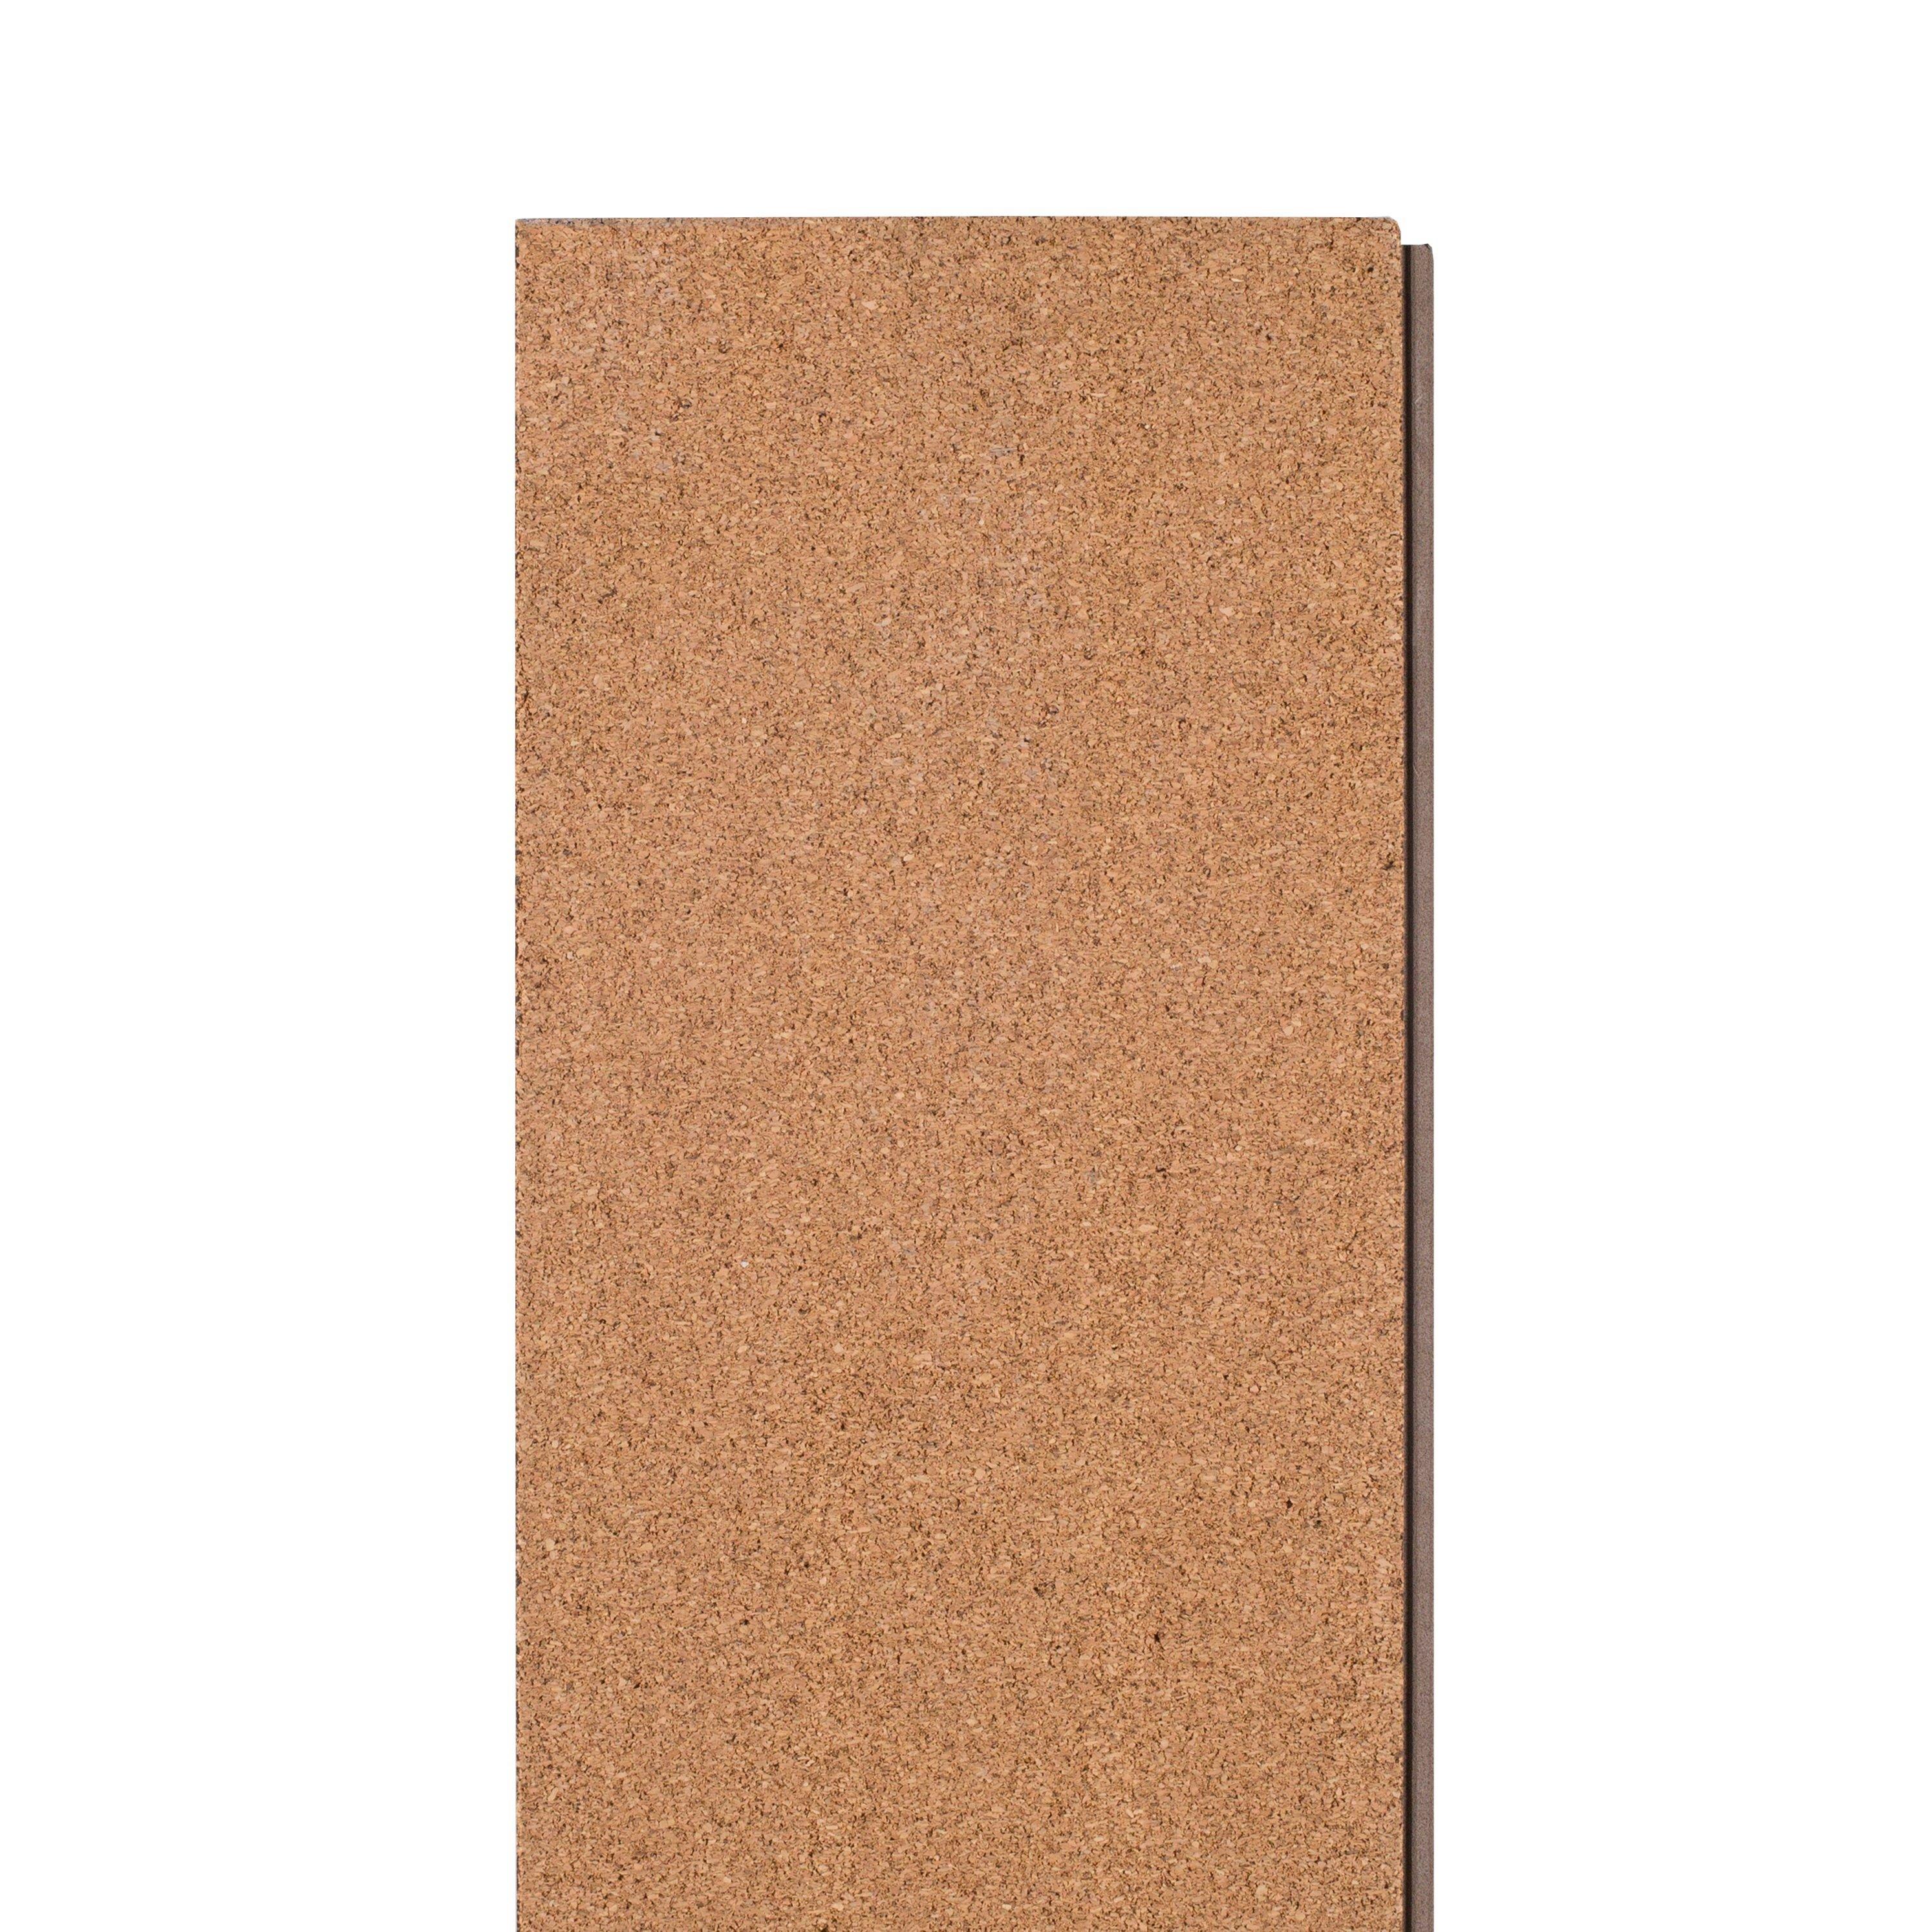 Palos Verdes Rigid Core Luxury Vinyl Plank - Cork Back